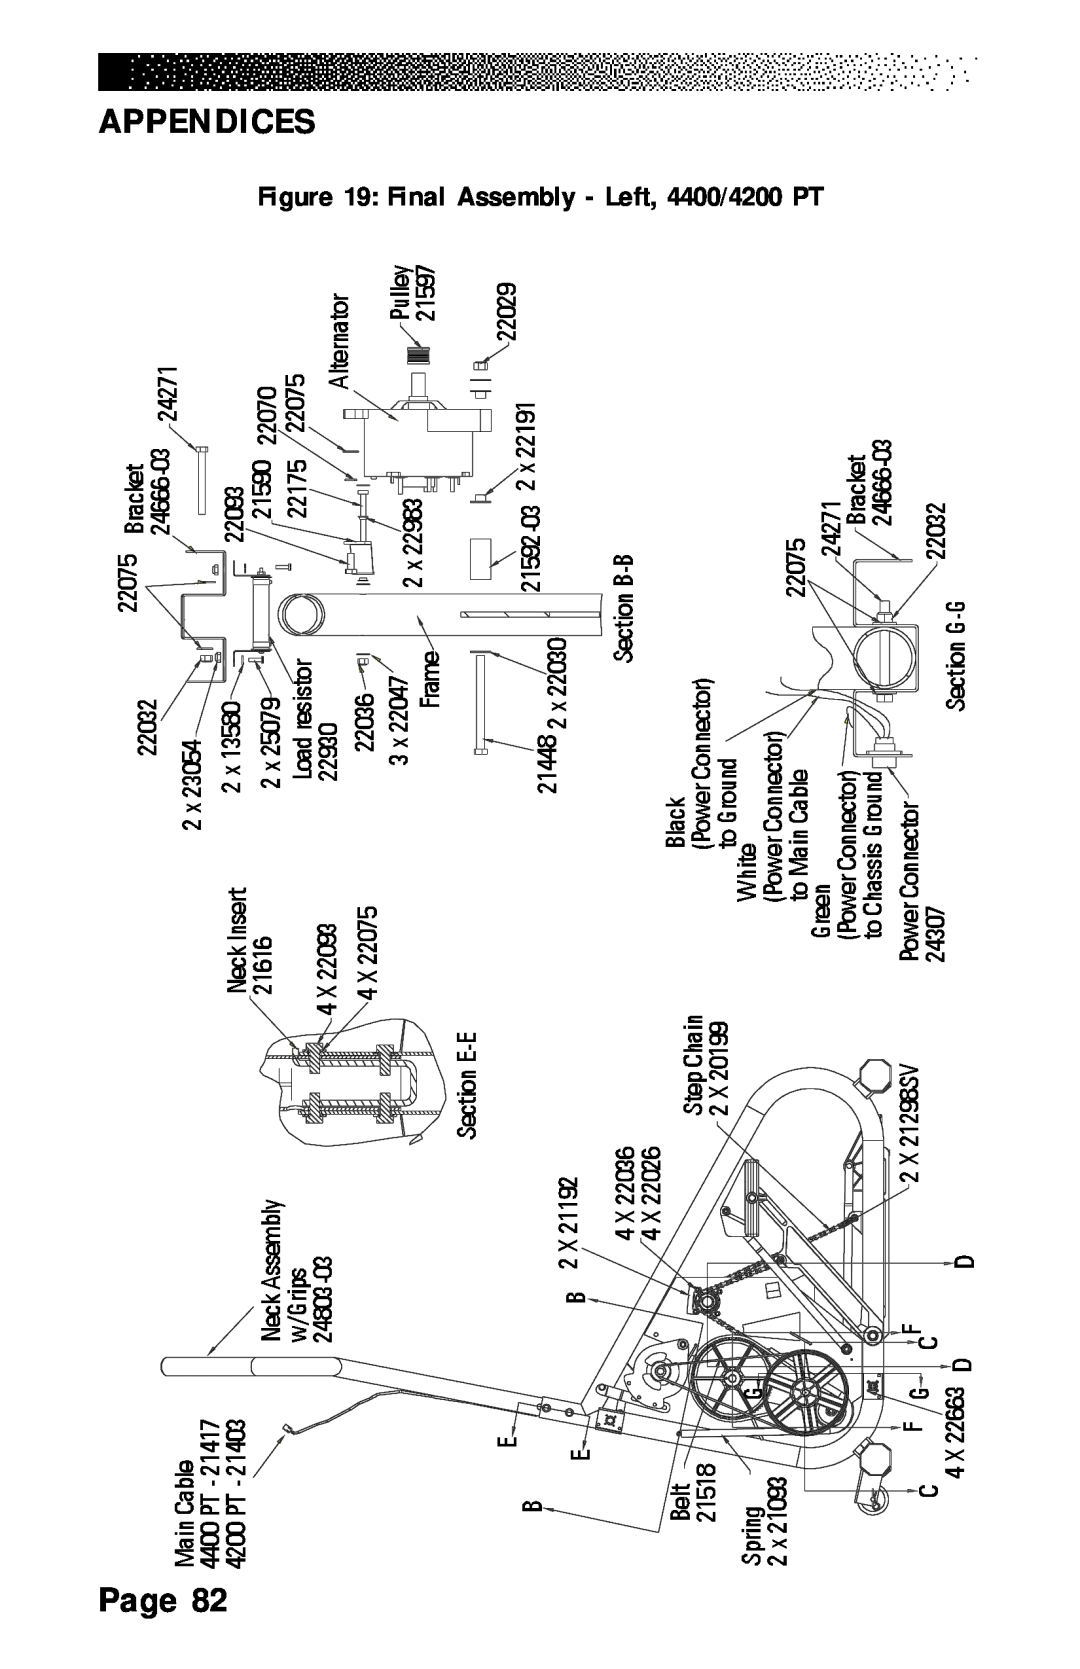 Stairmaster 4600 PT/CL, 4400 PT/CL manual Final Assembly - Left, 4400/4200 PT, Appendices, Page 